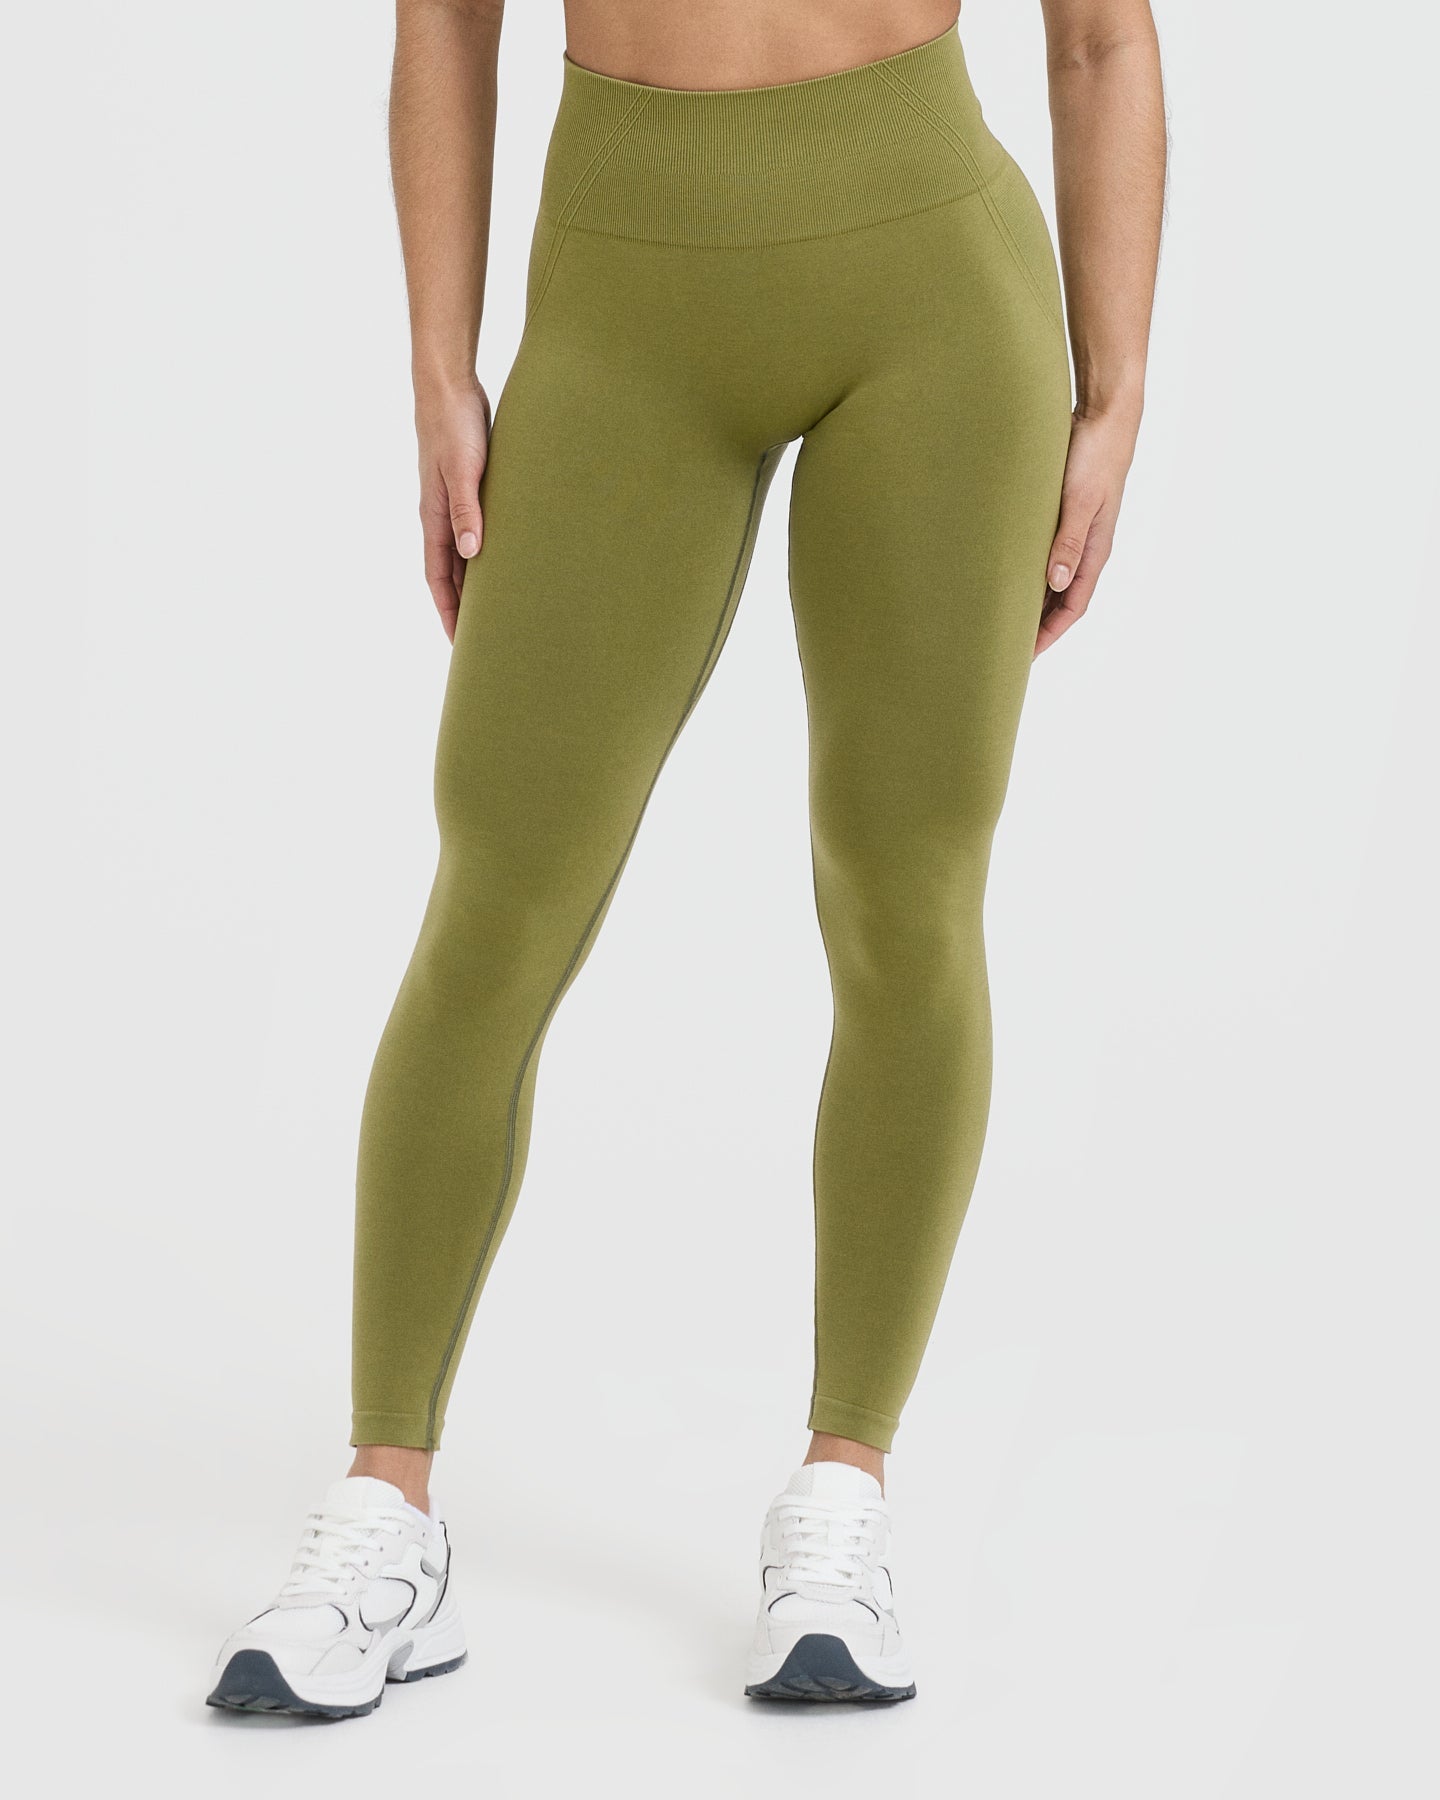 Khaki Green Workout Leggings With